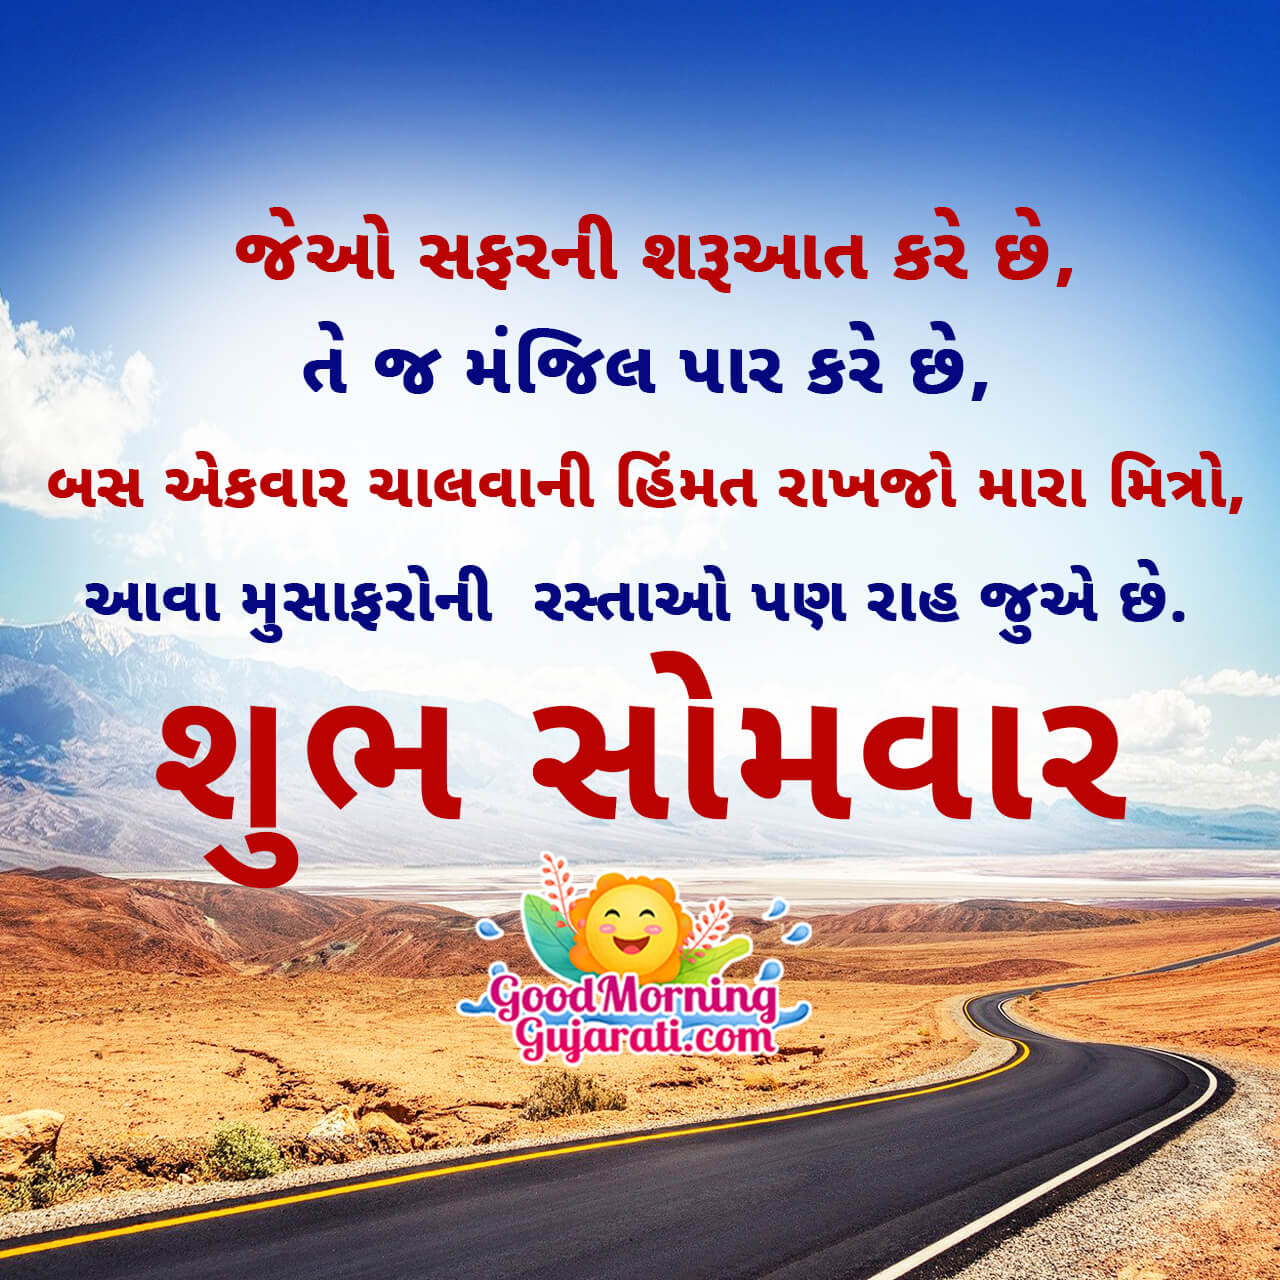 Good Morning Gujarati Days - Good Morning Wishes & Images in Gujarati